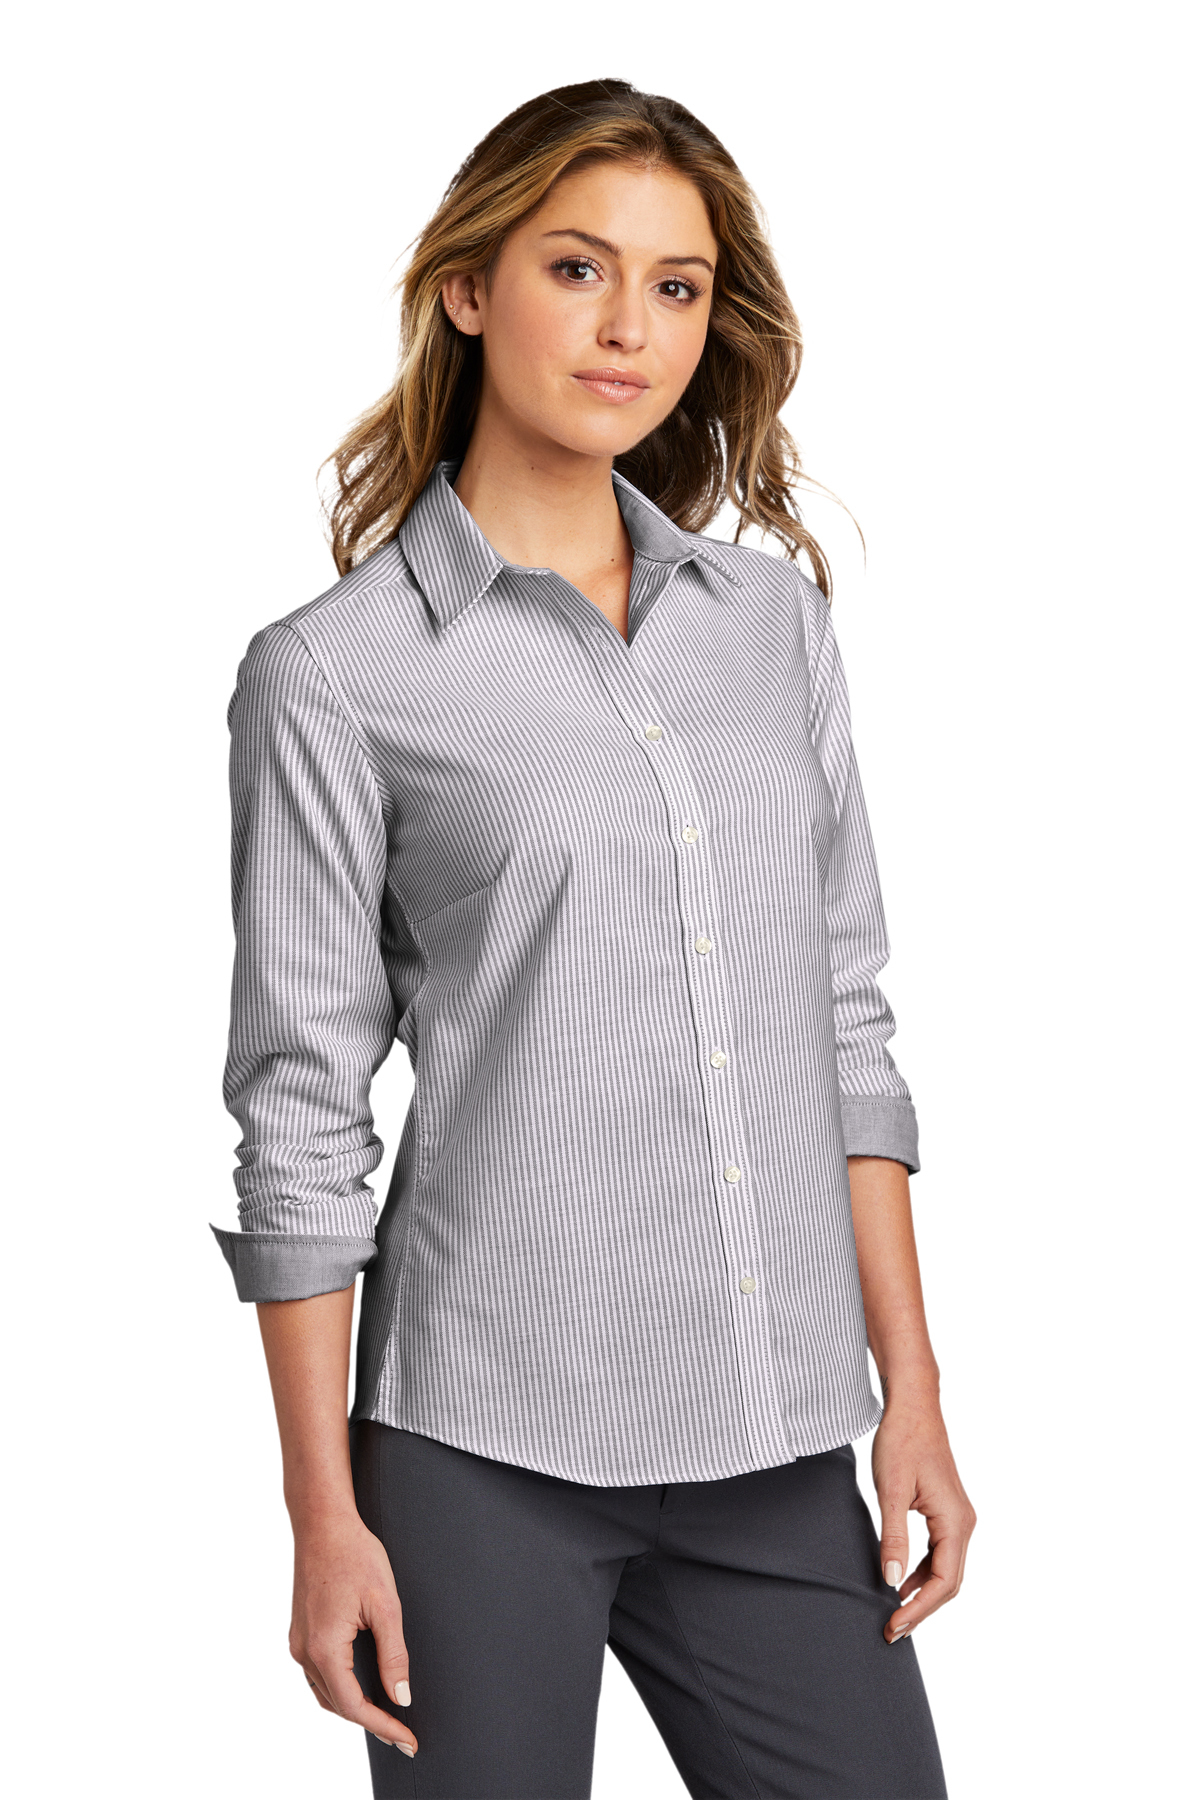 Port Authority Ladies SuperPro Oxford Stripe Shirt | Product | Company ...